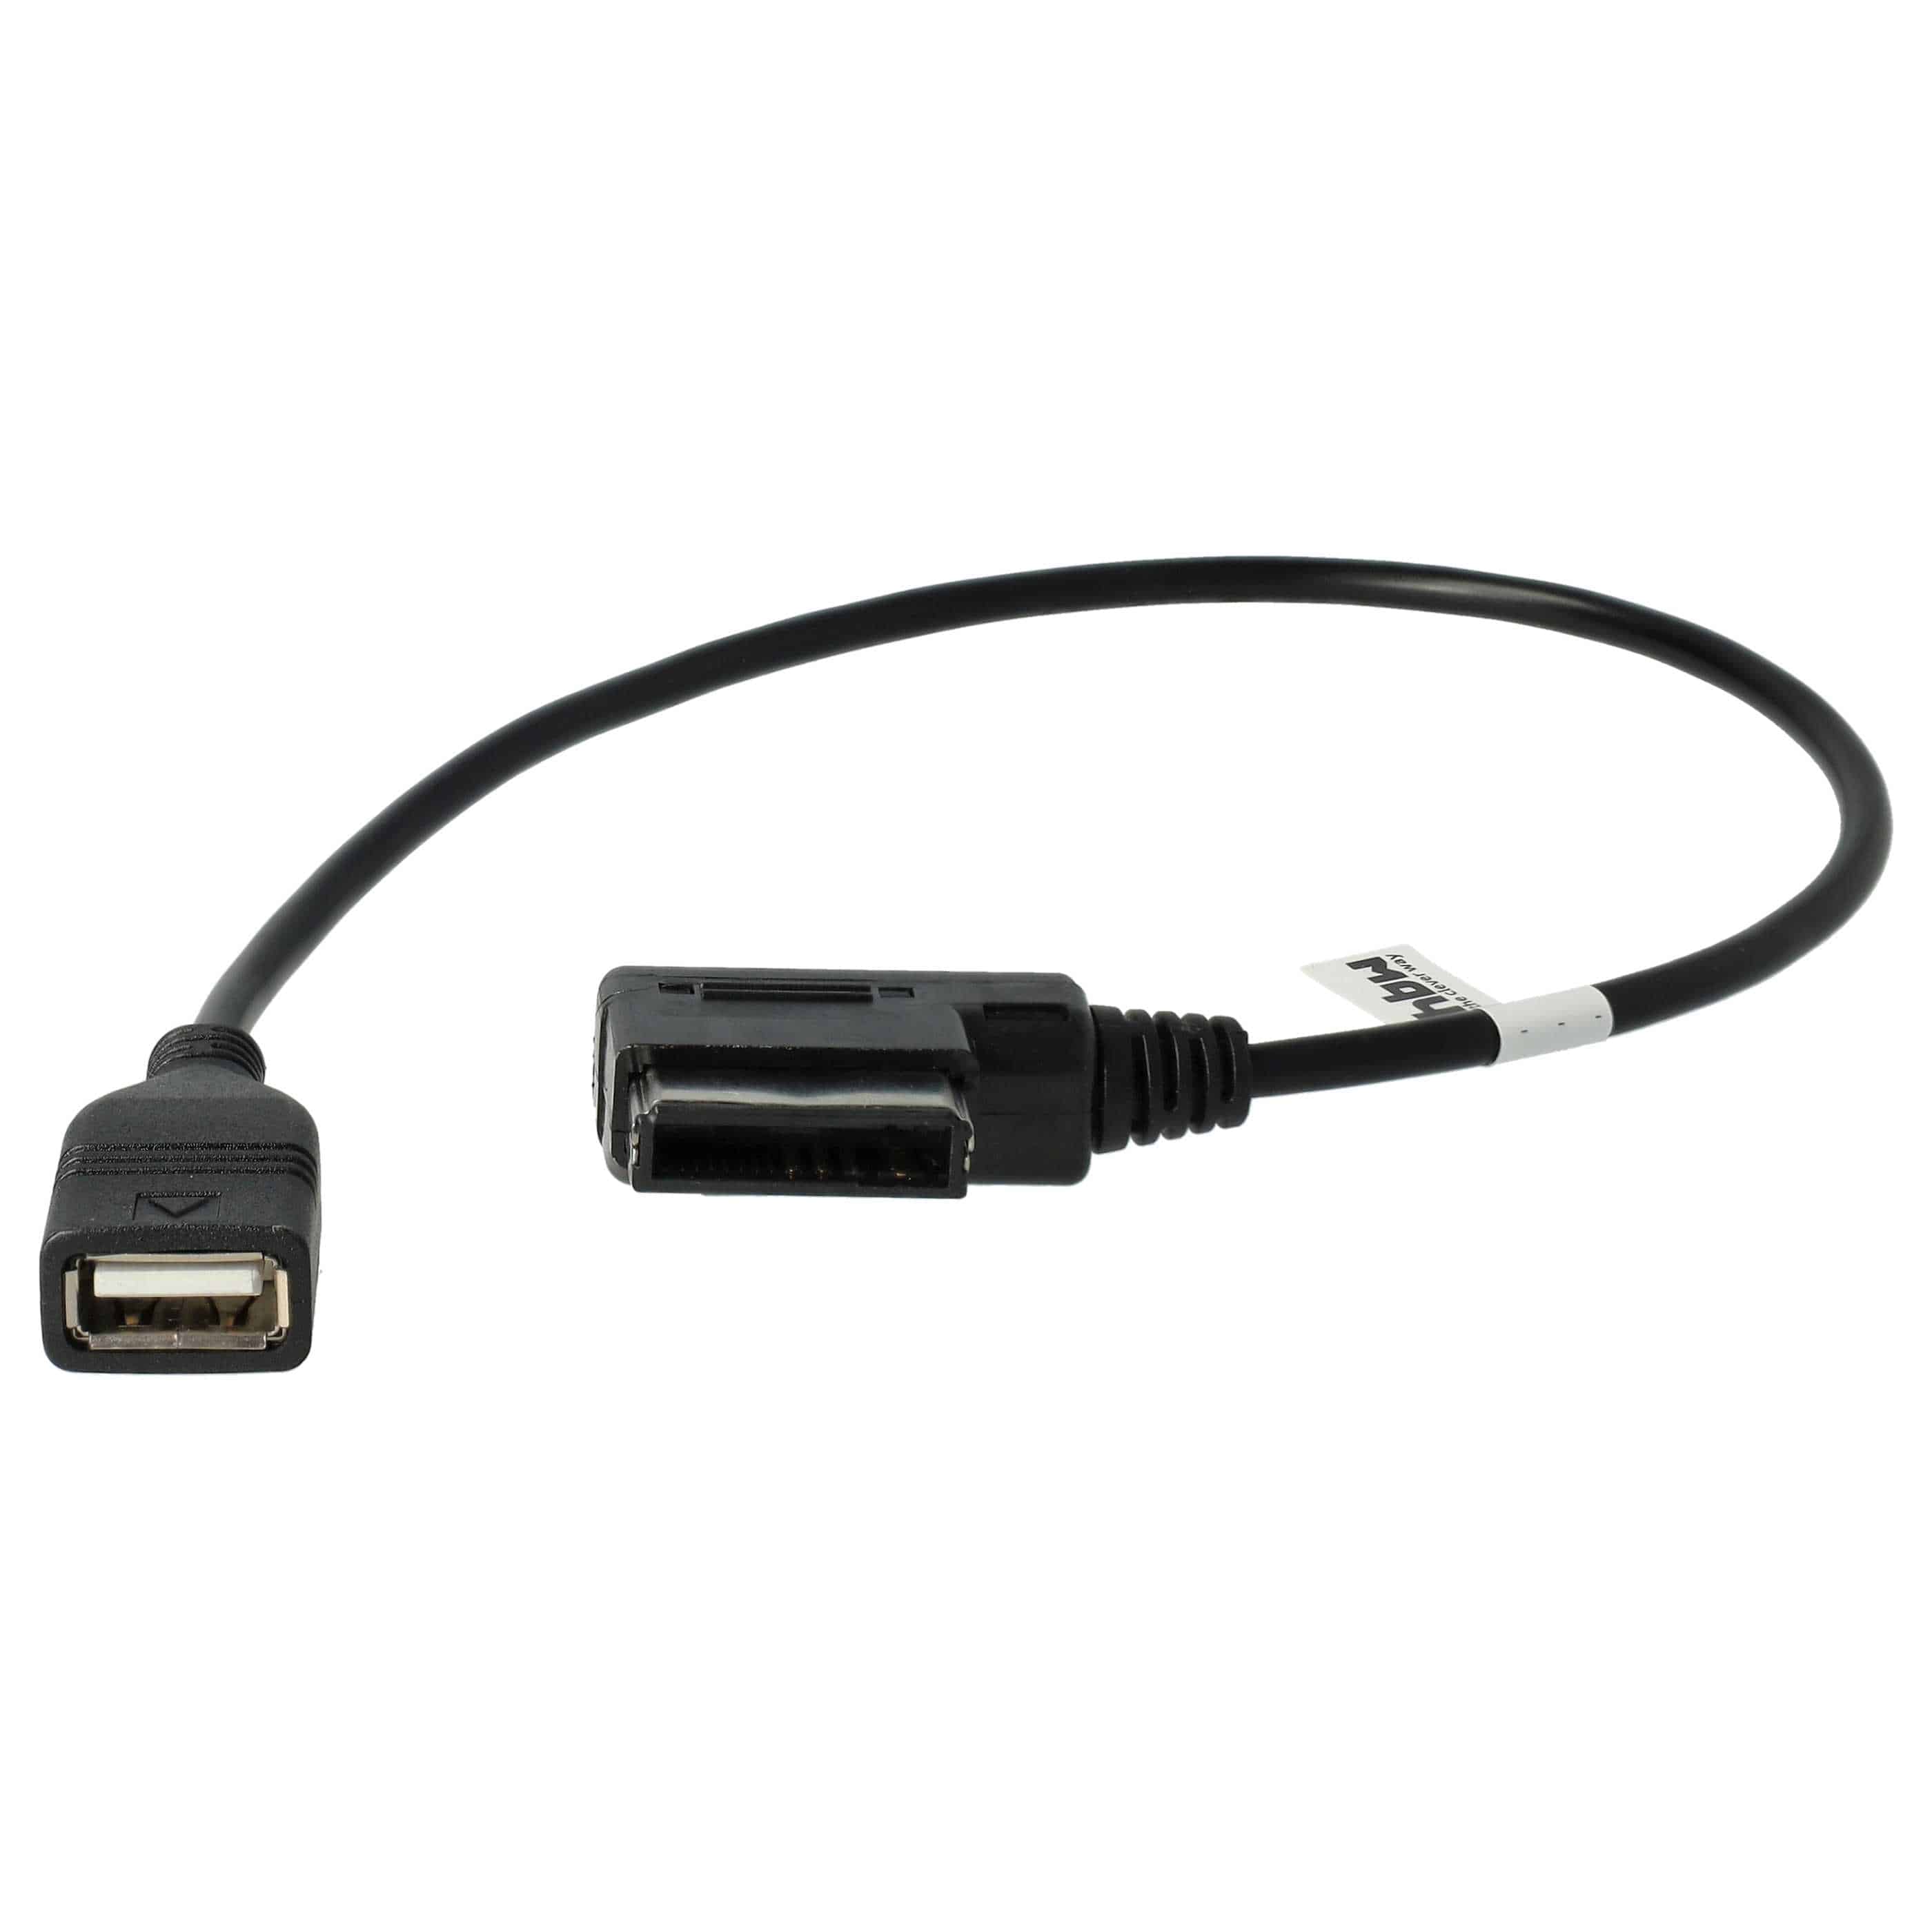 Audio Cable suitable for A1 Audi Car, Vehicle etc. - USB Adapter, 37.1 cm long